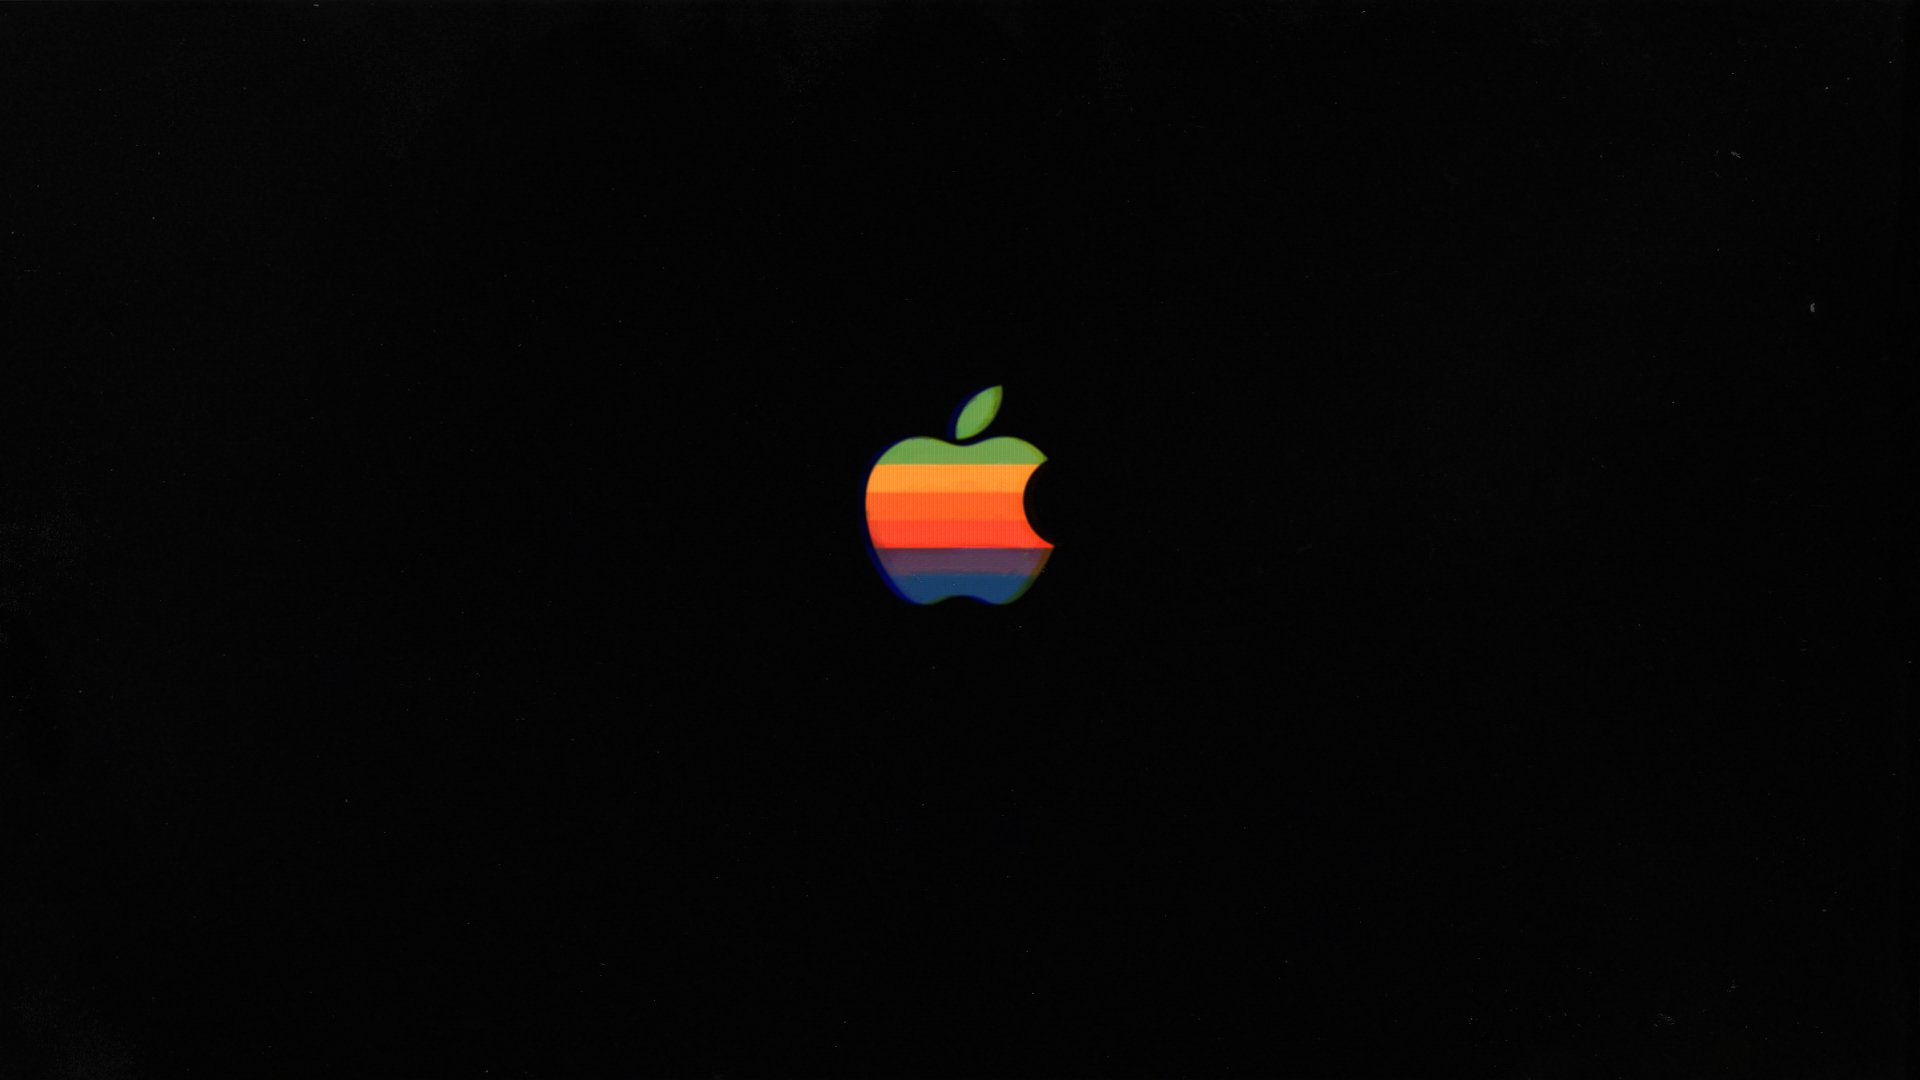 Brown apple logo wallpaper for mac